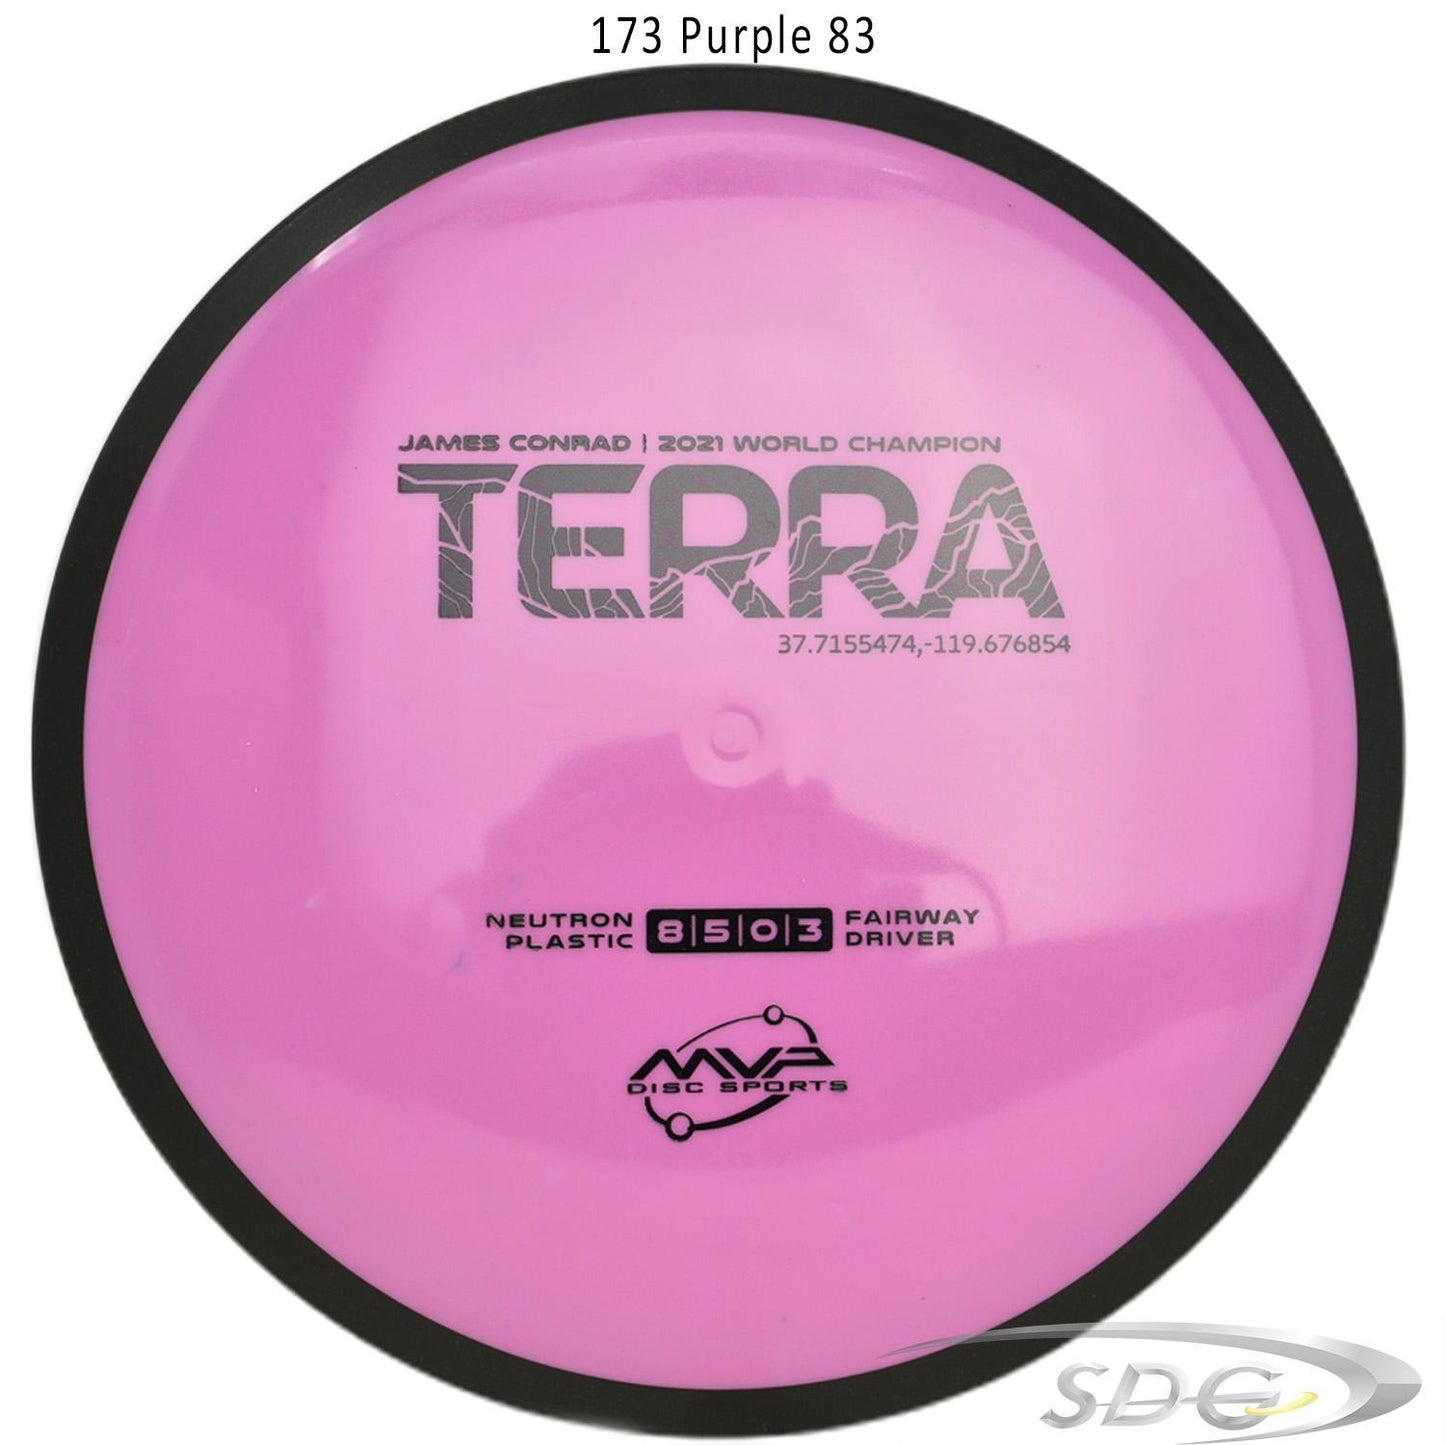 mvp-neutron-terra-2022-james-conrad-disc-golf-fairway-driver 173 Purple 83 